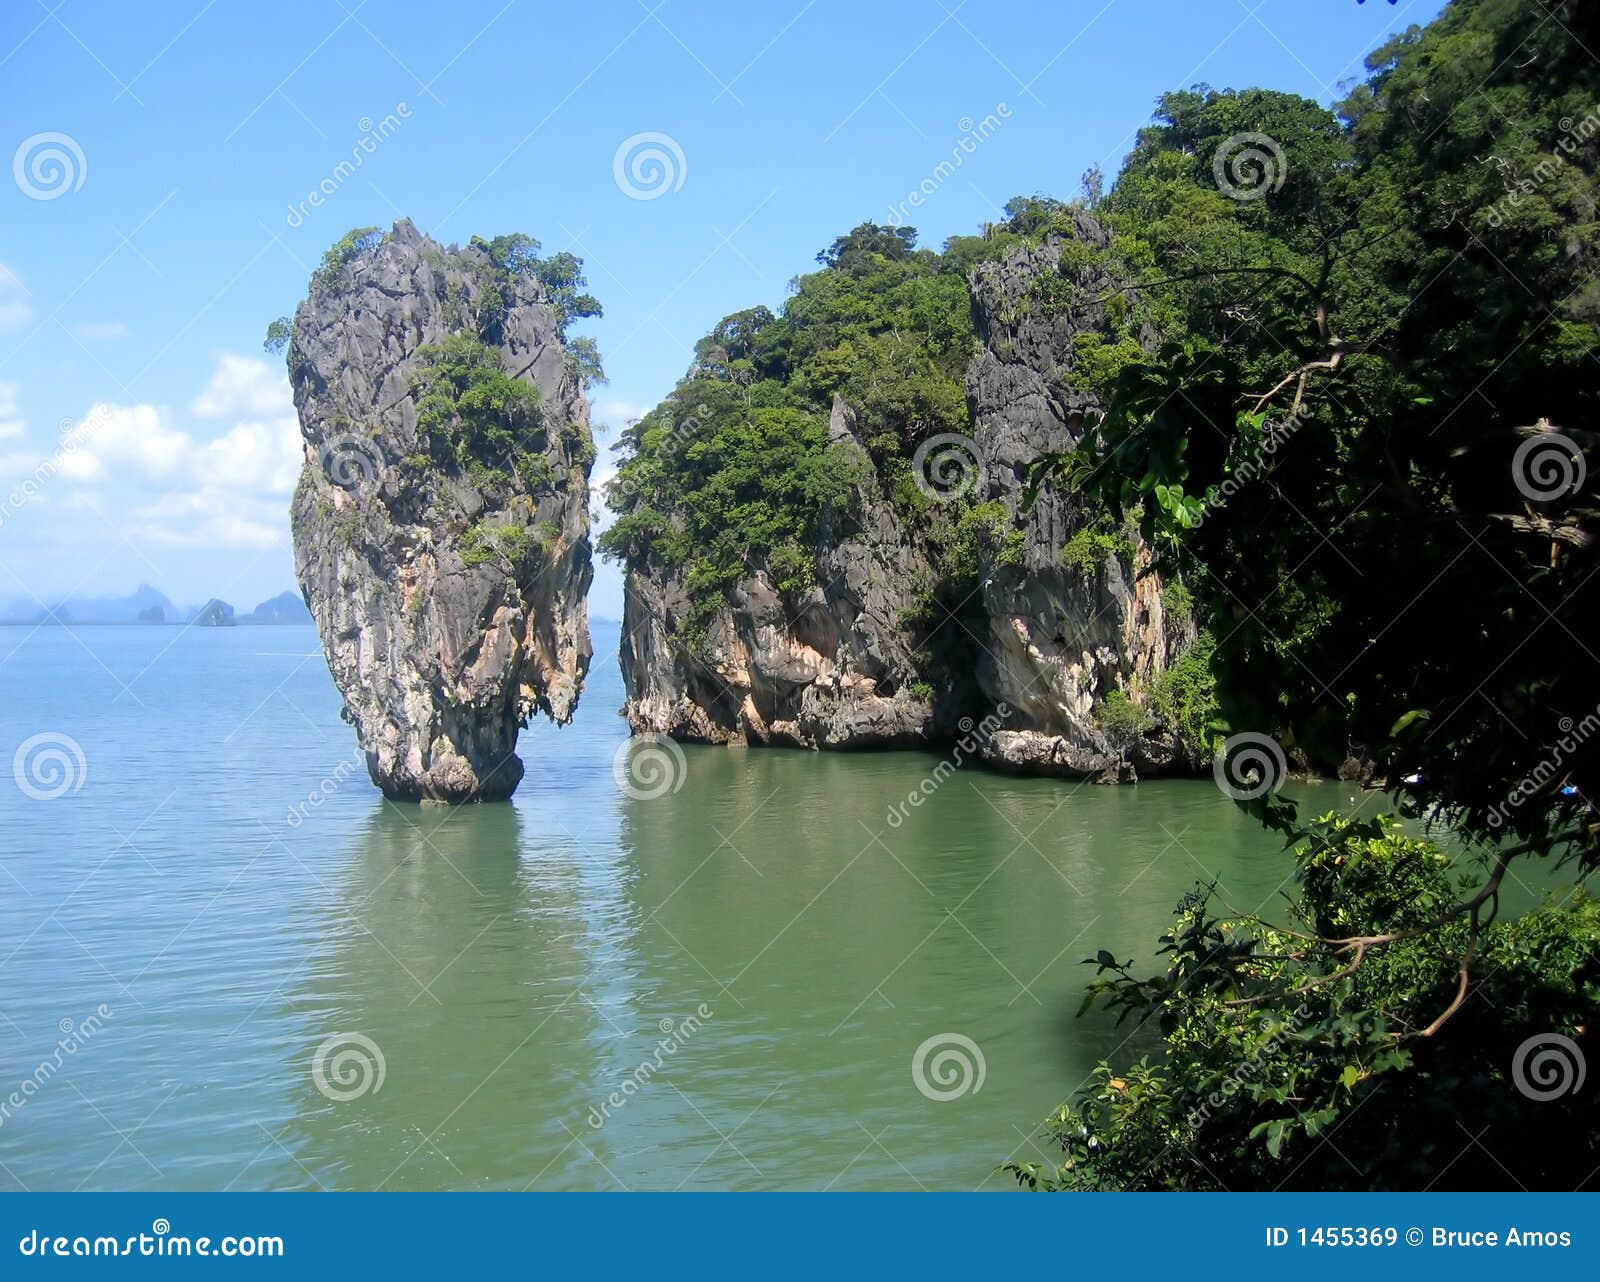 Eiland in De Baai Van Phang Nga, Thailand Stock Afbeelding - Image of ...